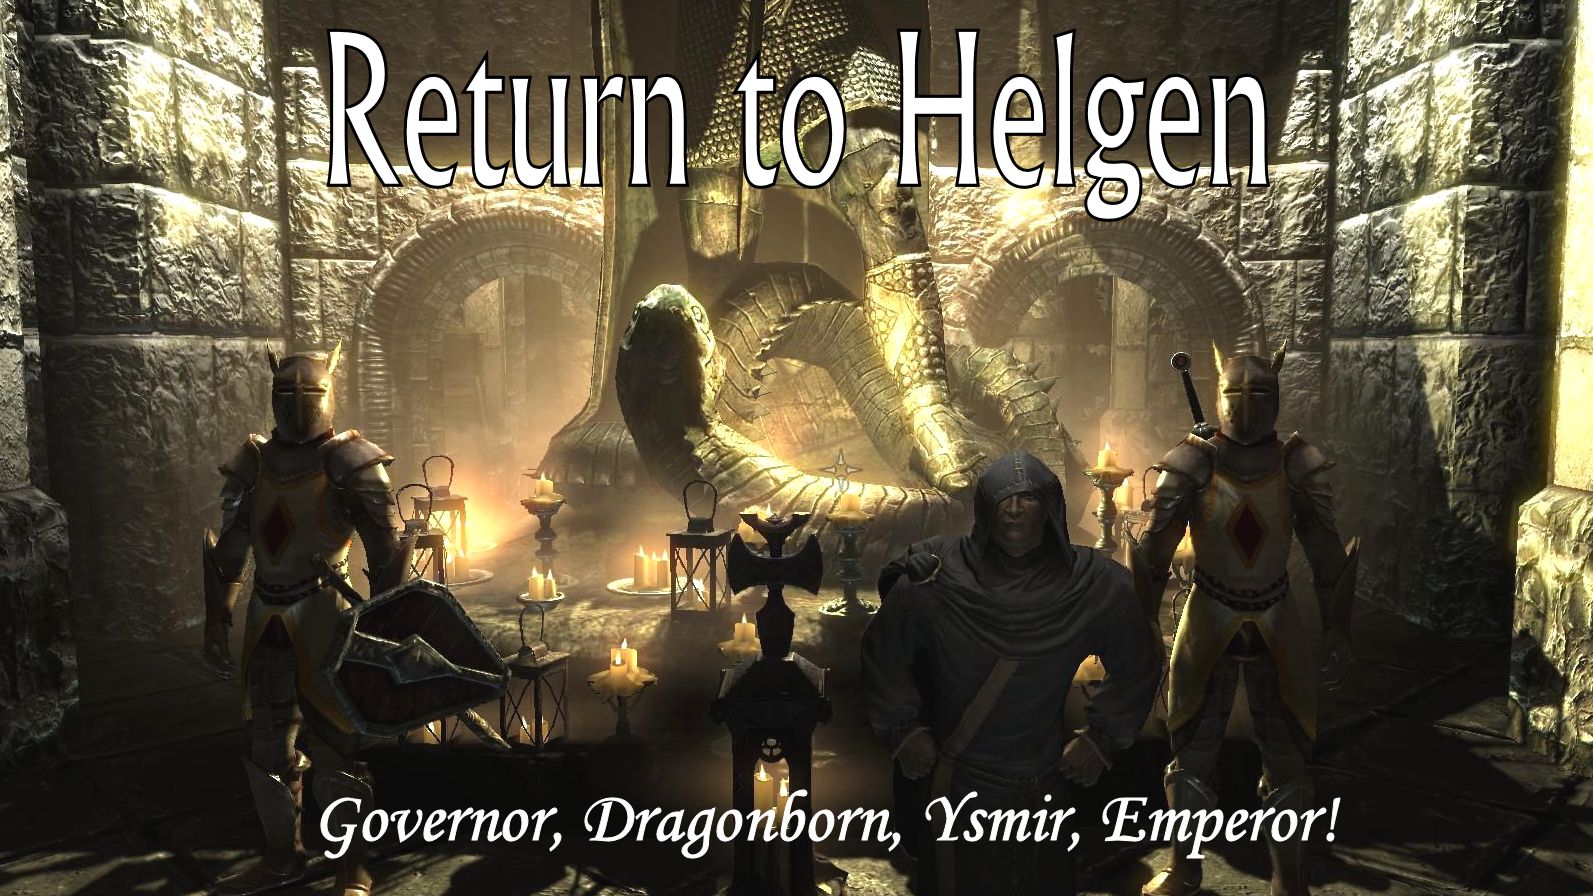 skyrim changing of the guard helgen reborn quest id